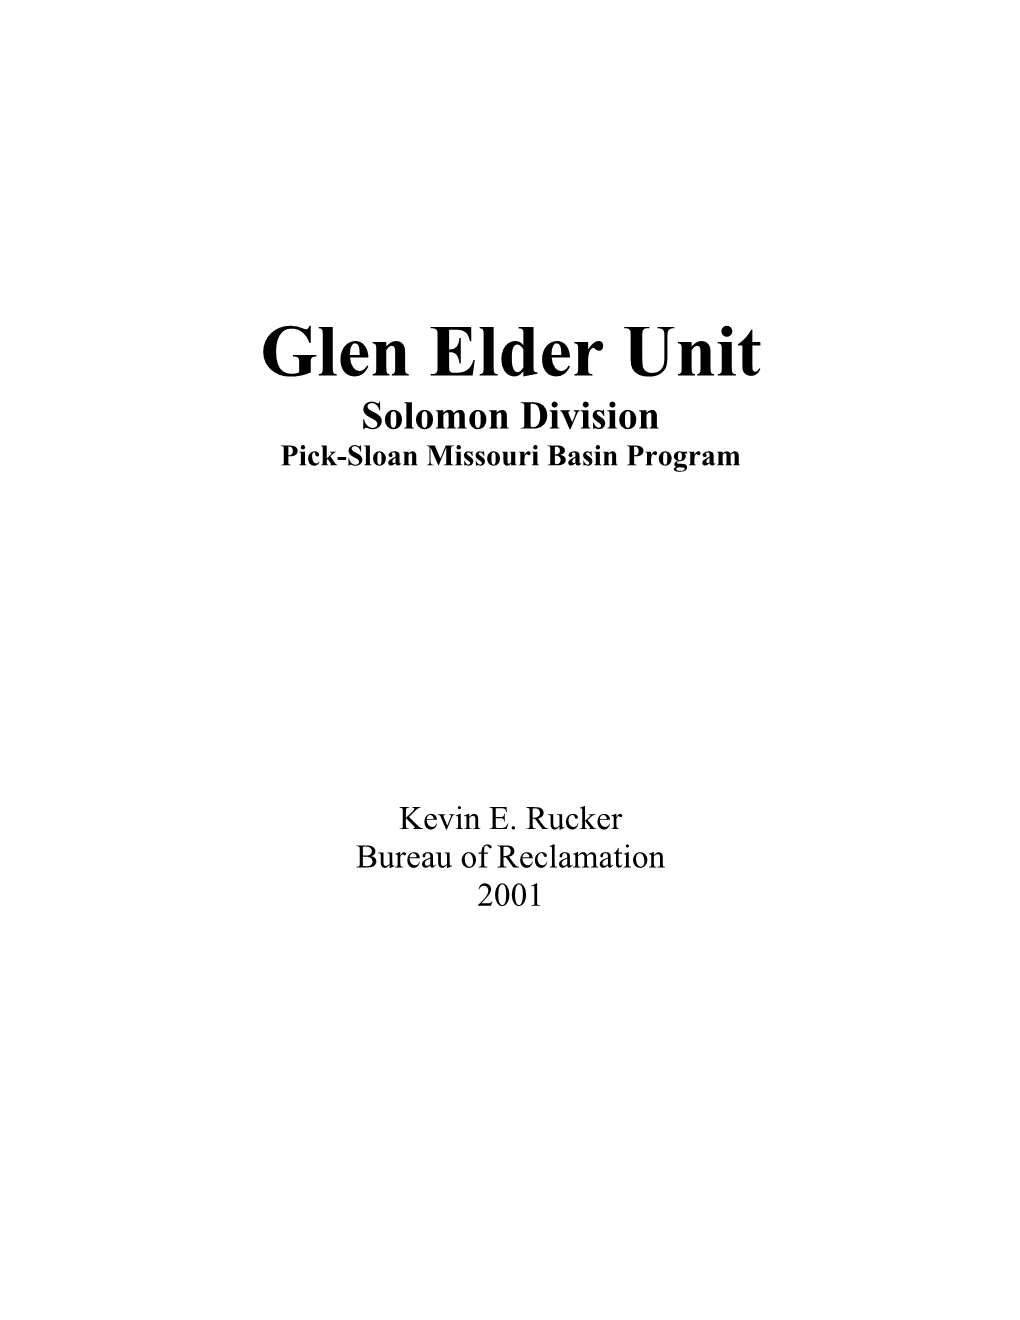 Glen Elder Unit, P-SMBP, Kansas